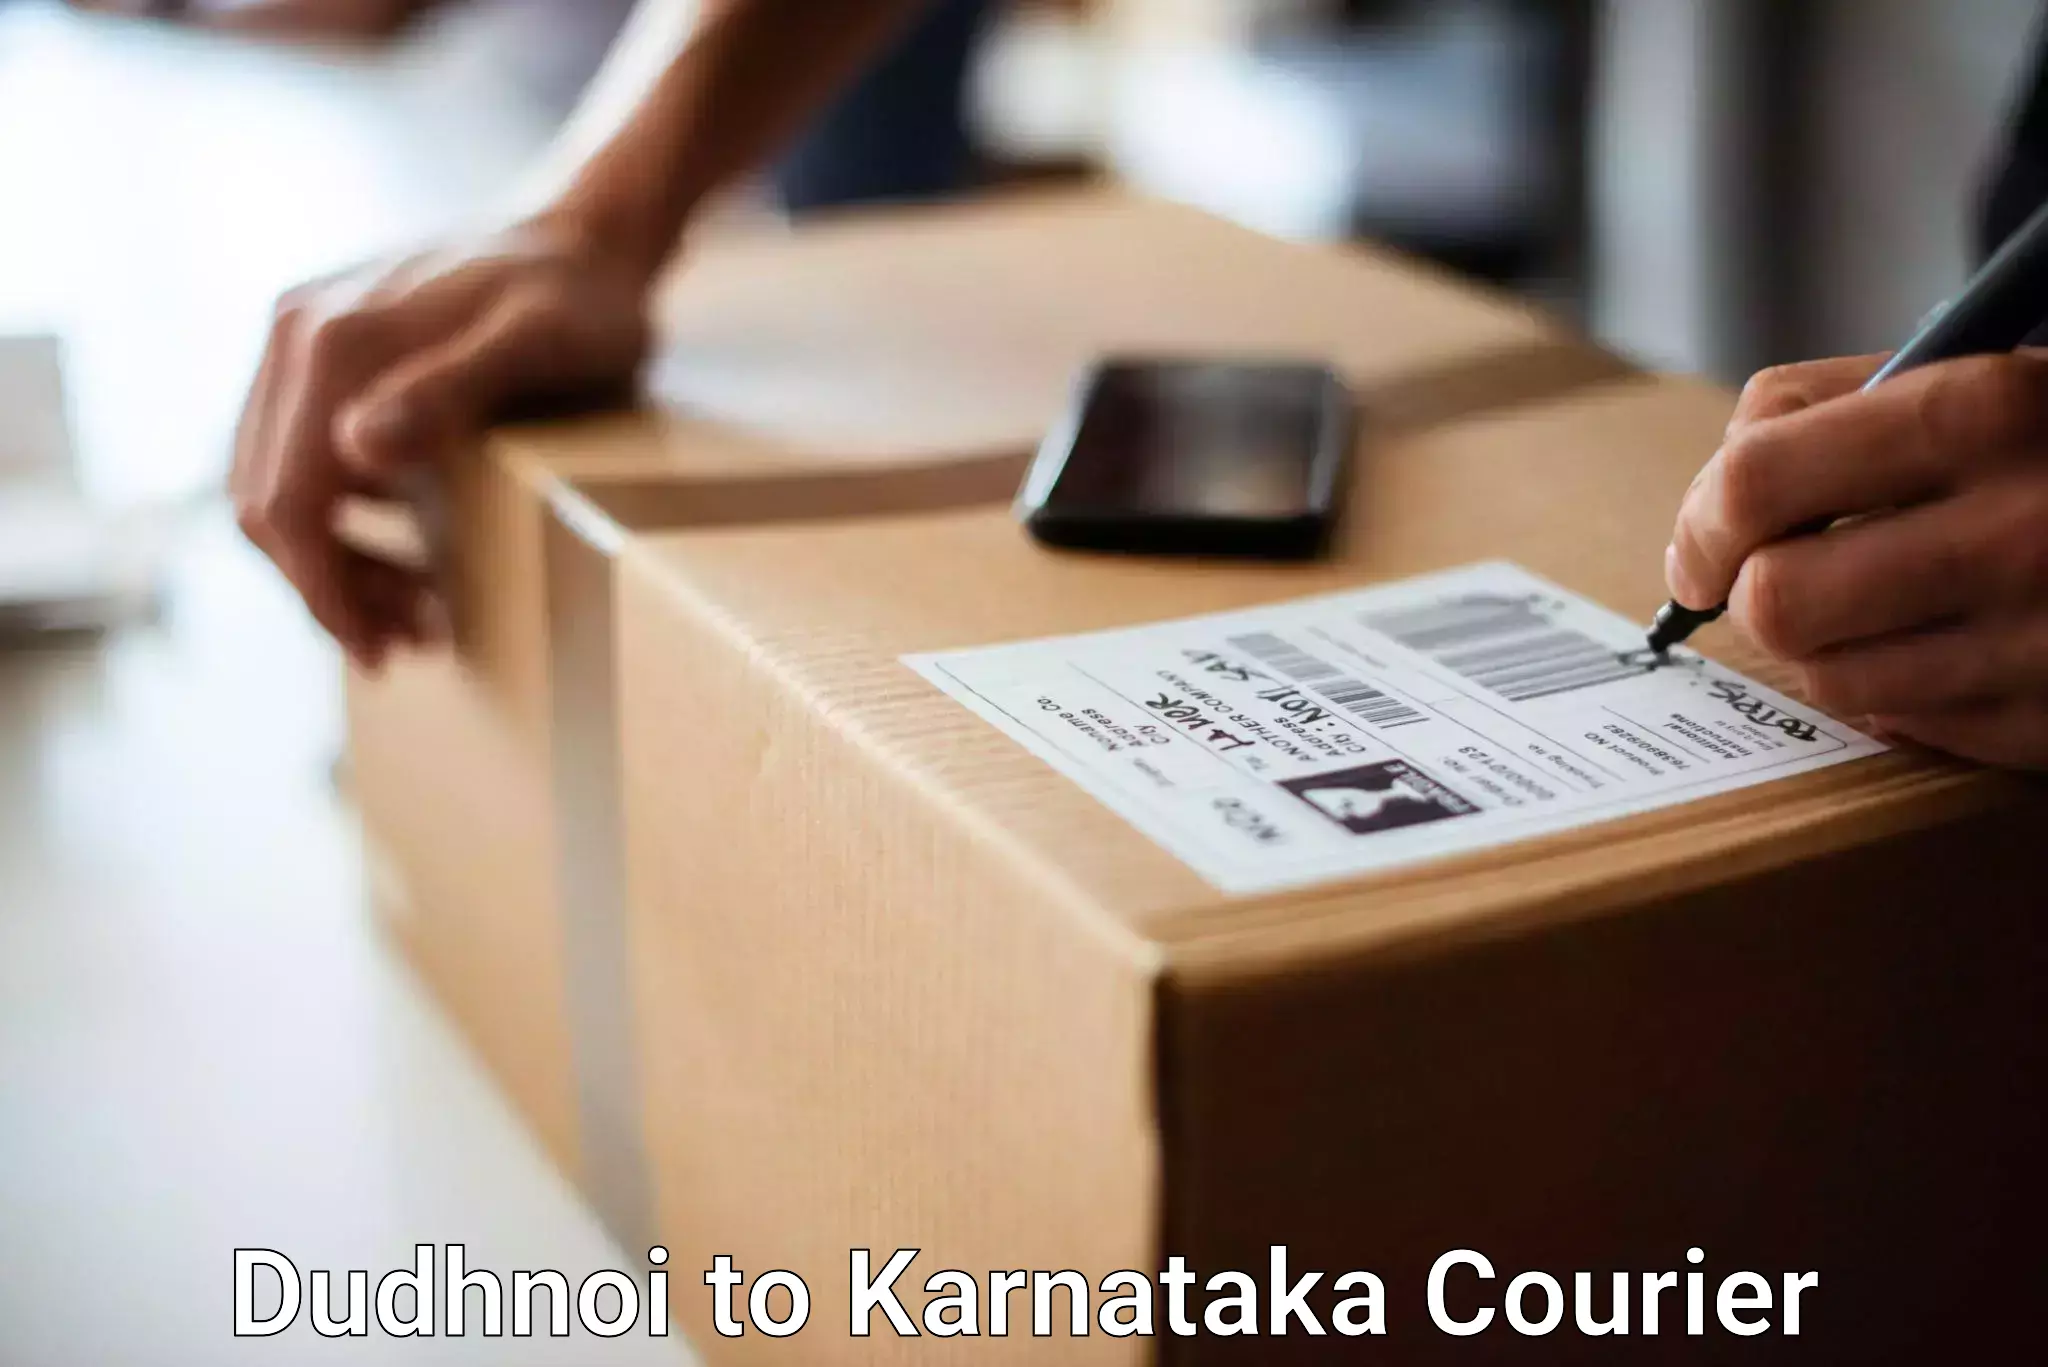 Luggage transport consultancy Dudhnoi to Karnataka